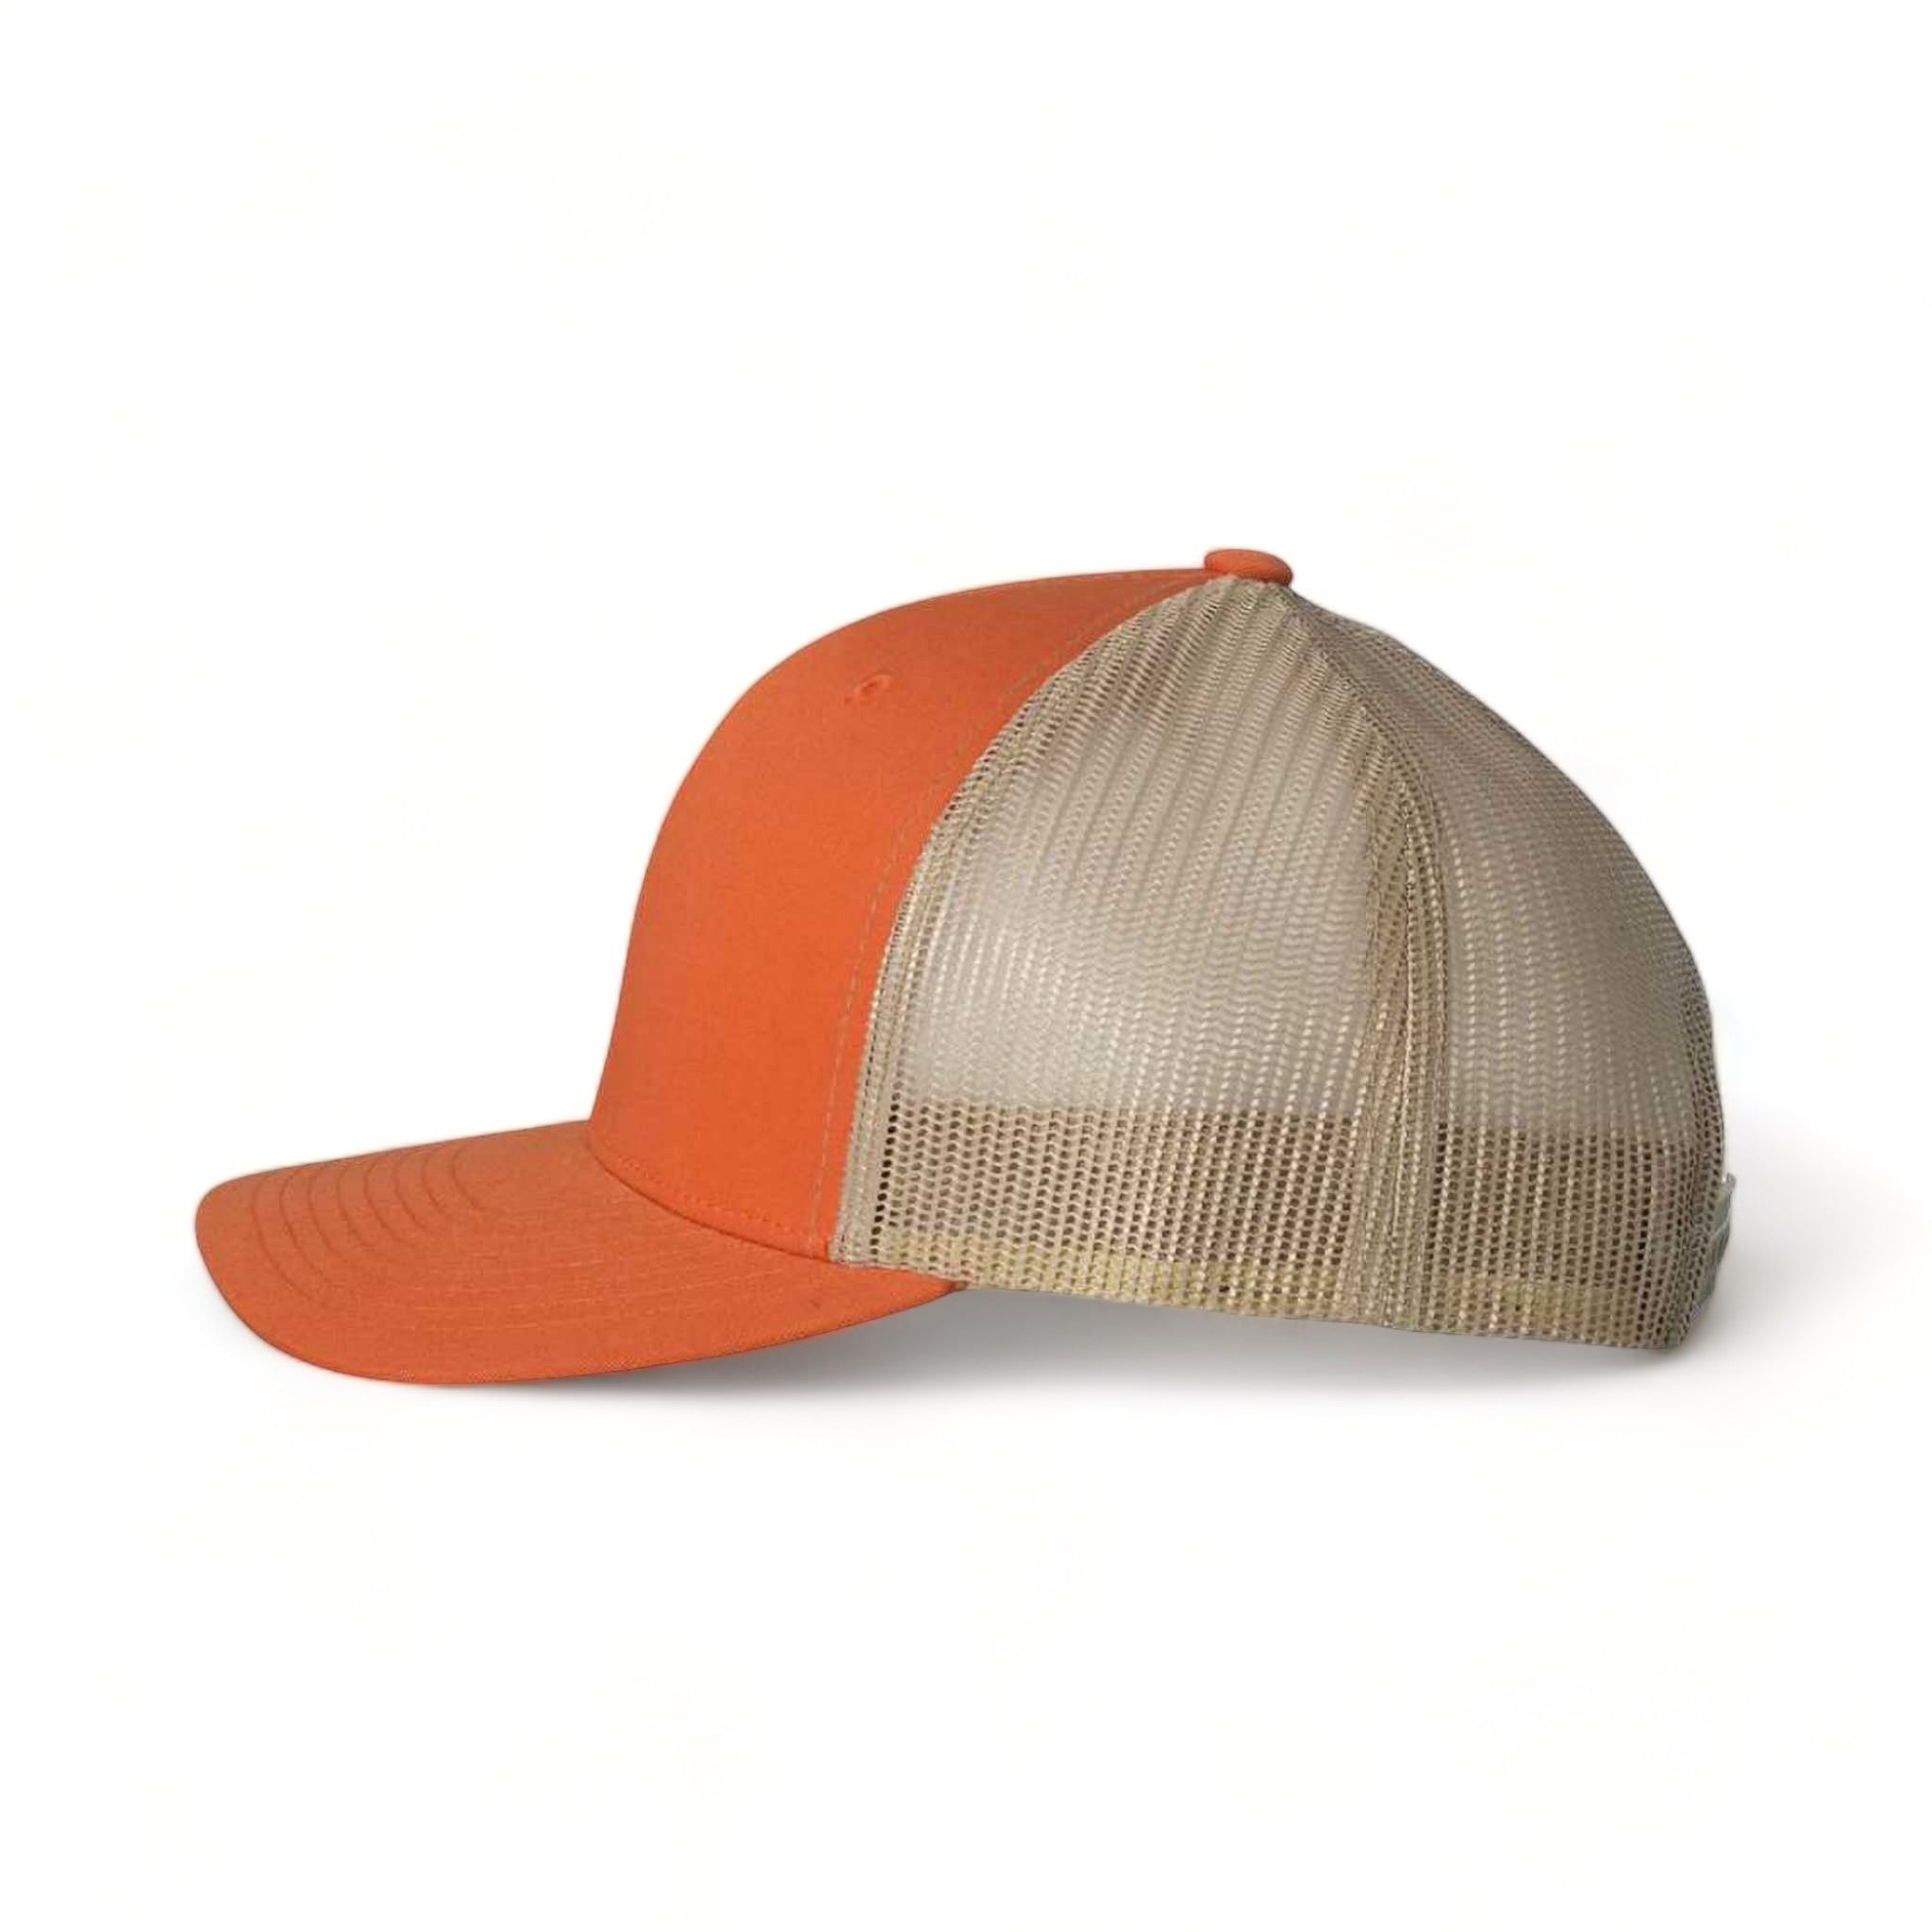 Side view of YP Classics 6606 custom hat in rustic orange and khaki